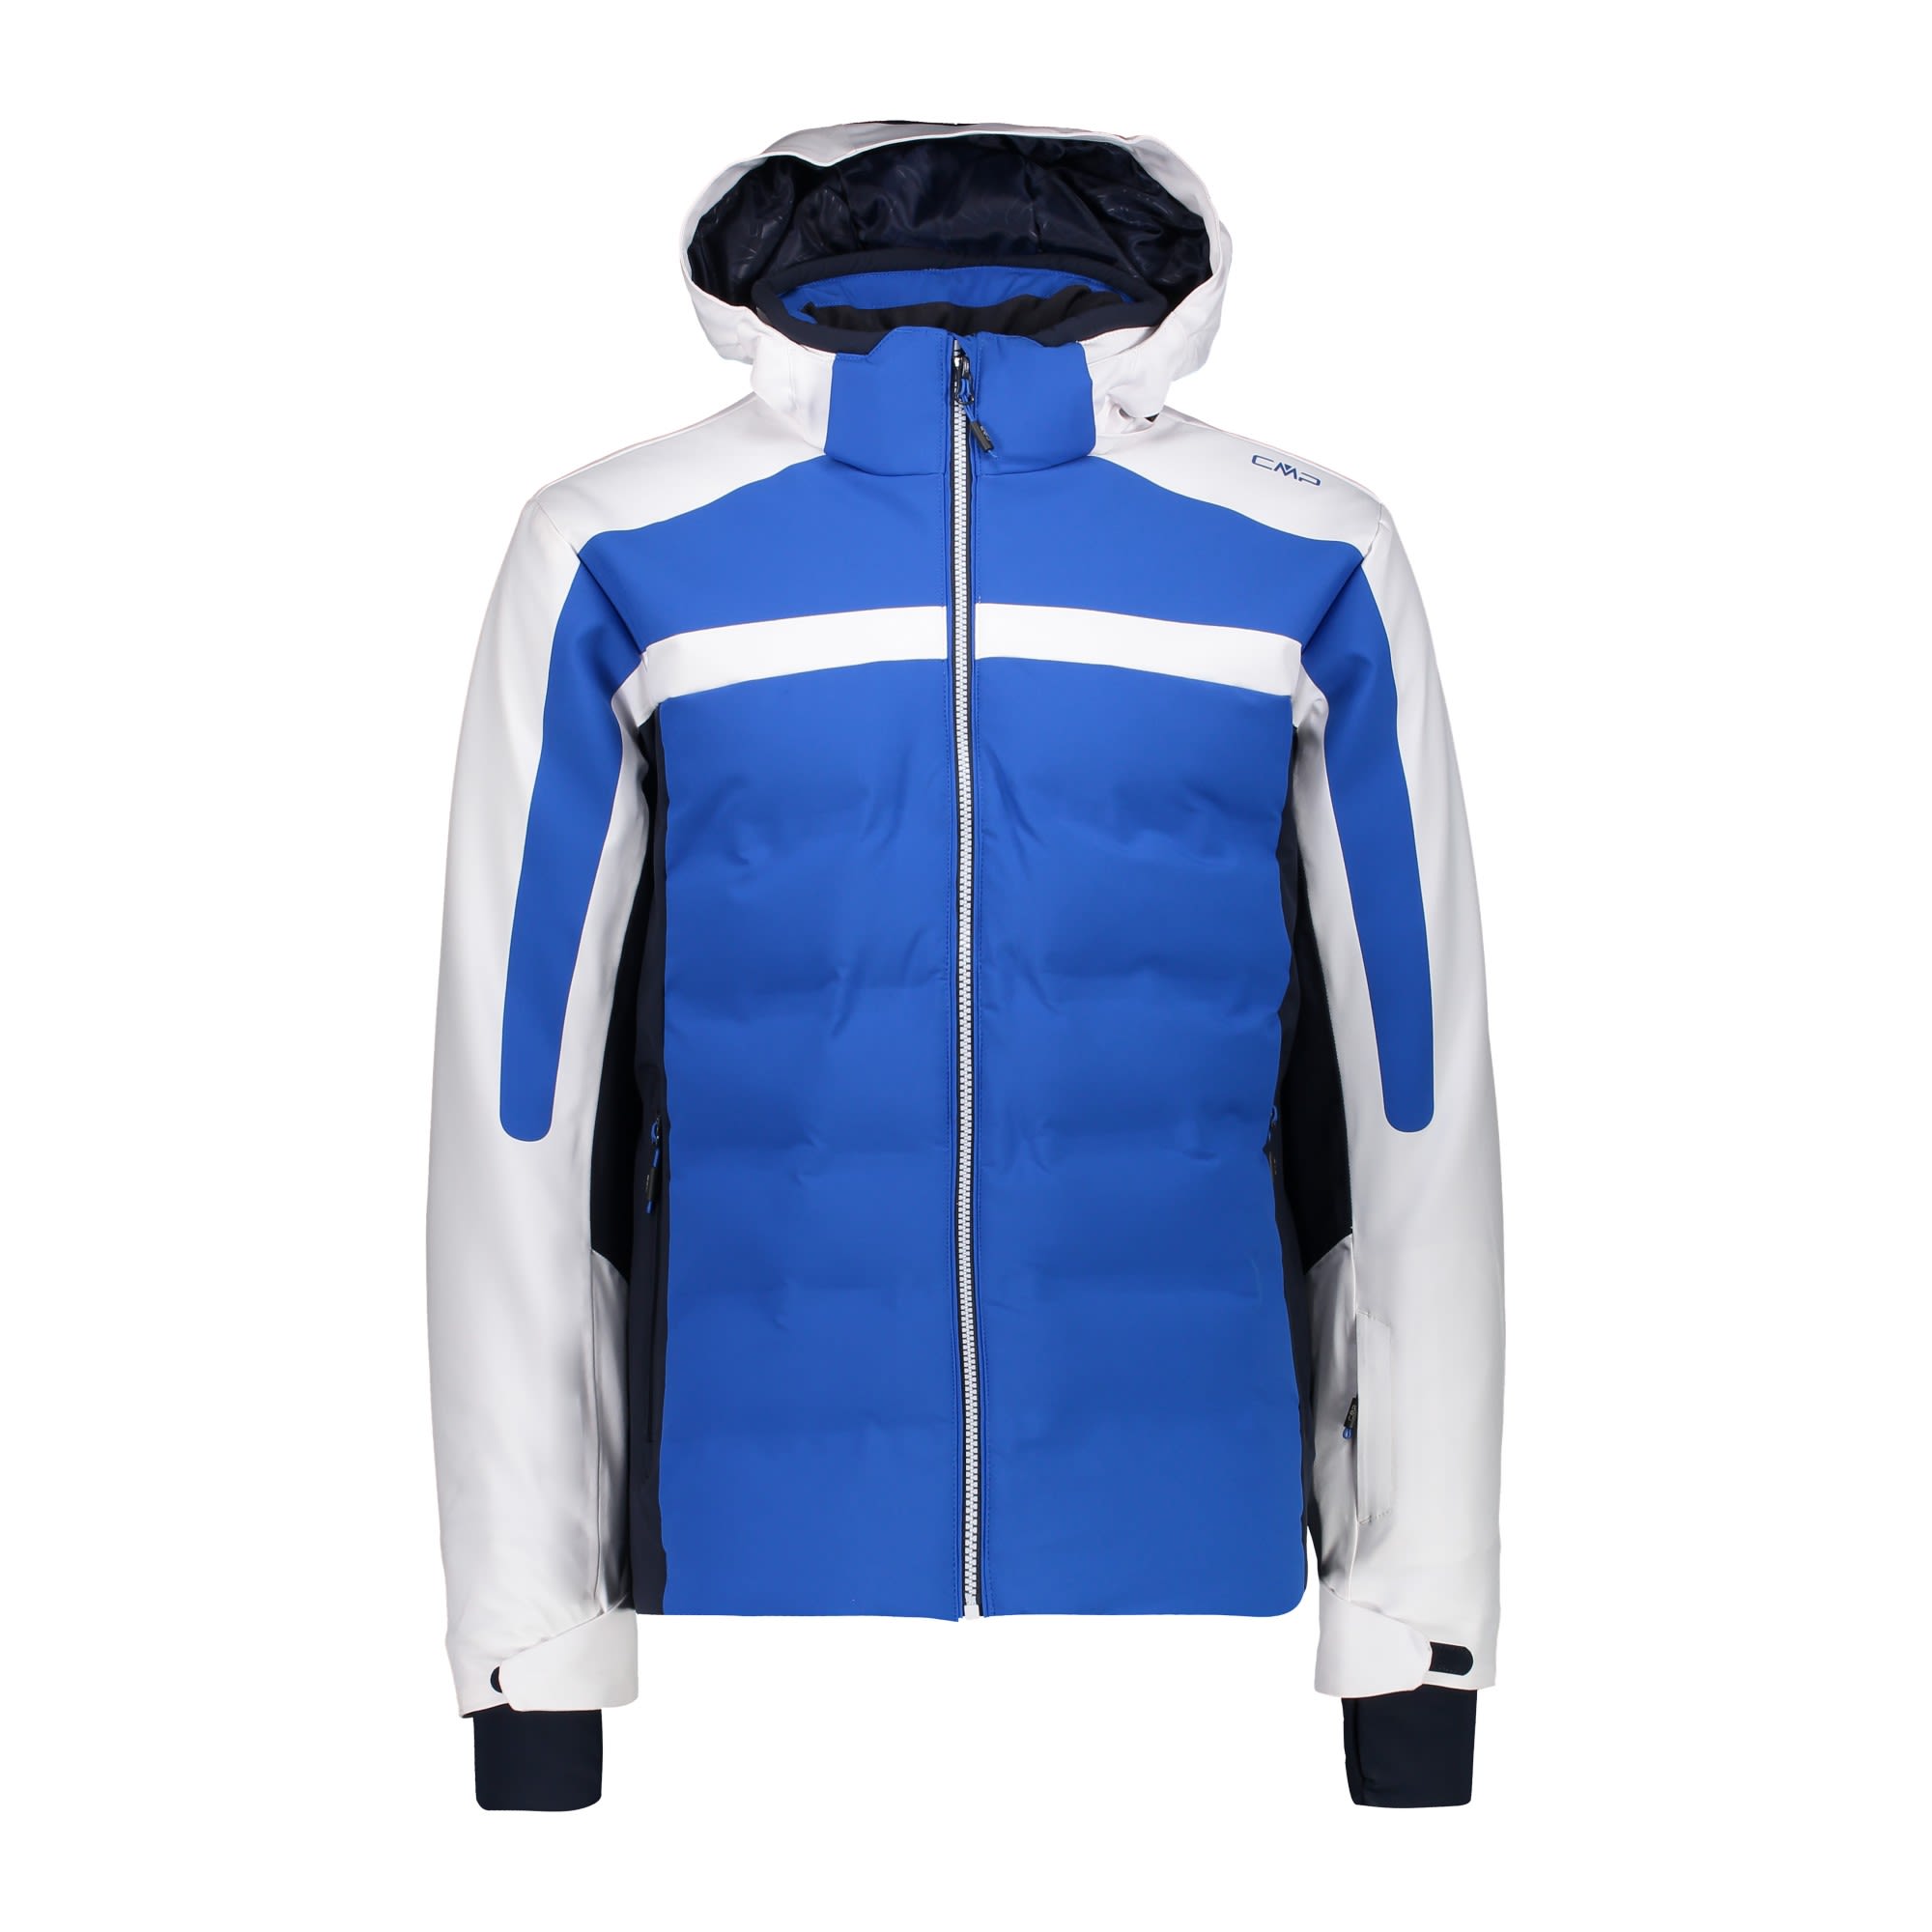 CMP Jacket Zip Hood Blau - Weiss- Male Regenjacken und Hardshells- Grsse 58 - Farbe Royal unter CMP